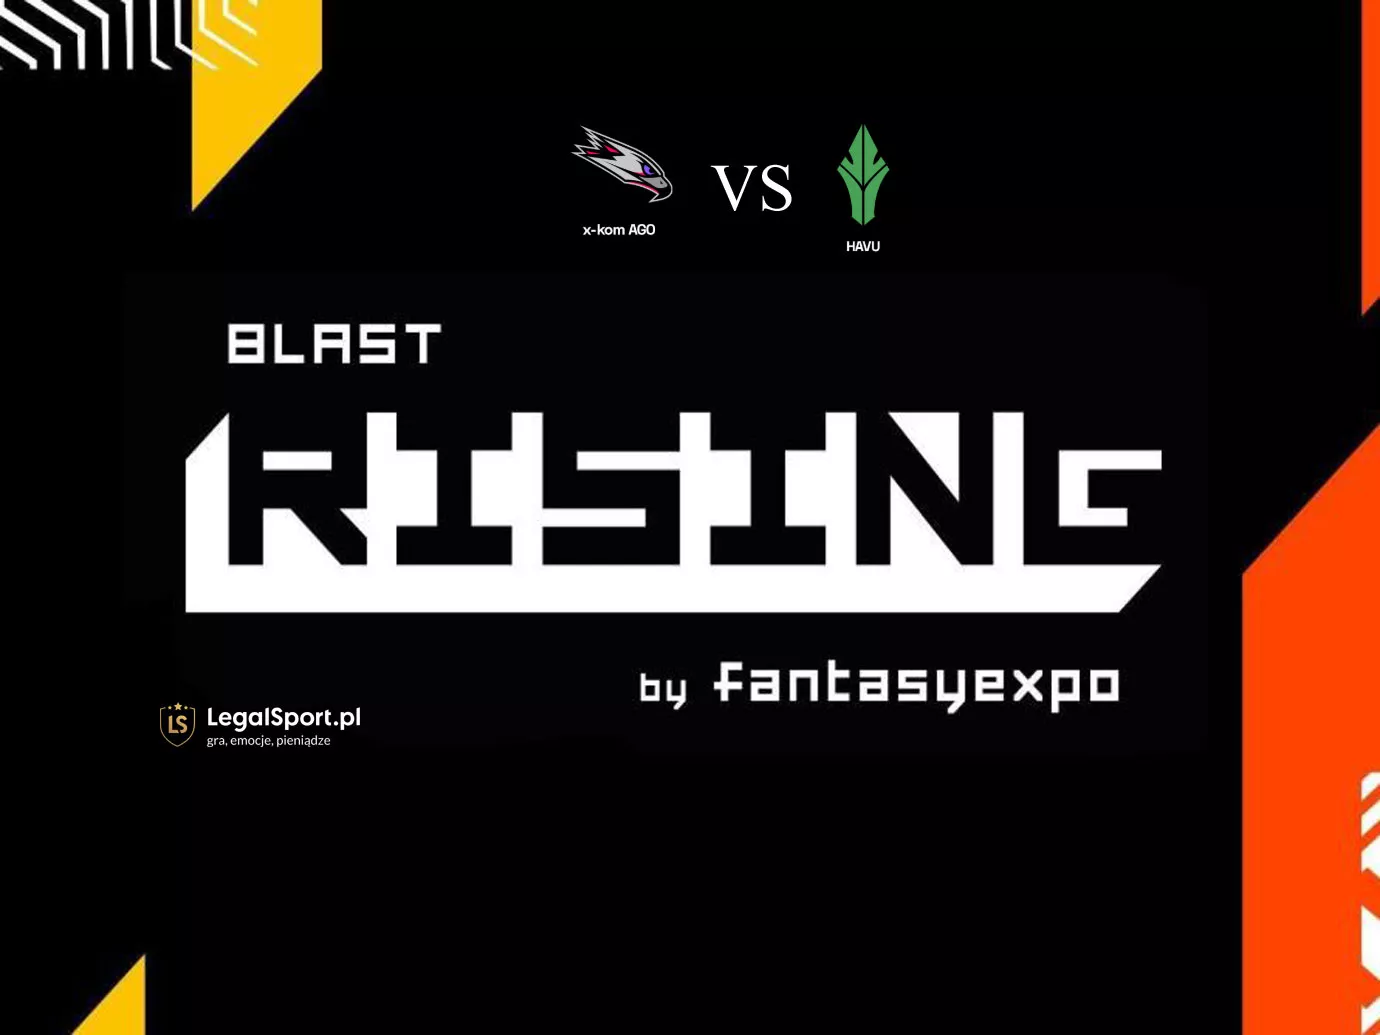 BLAST Rising: Kursy i typy na mecz x-kom AGO Esports vs HAVU Gaming w grupie B